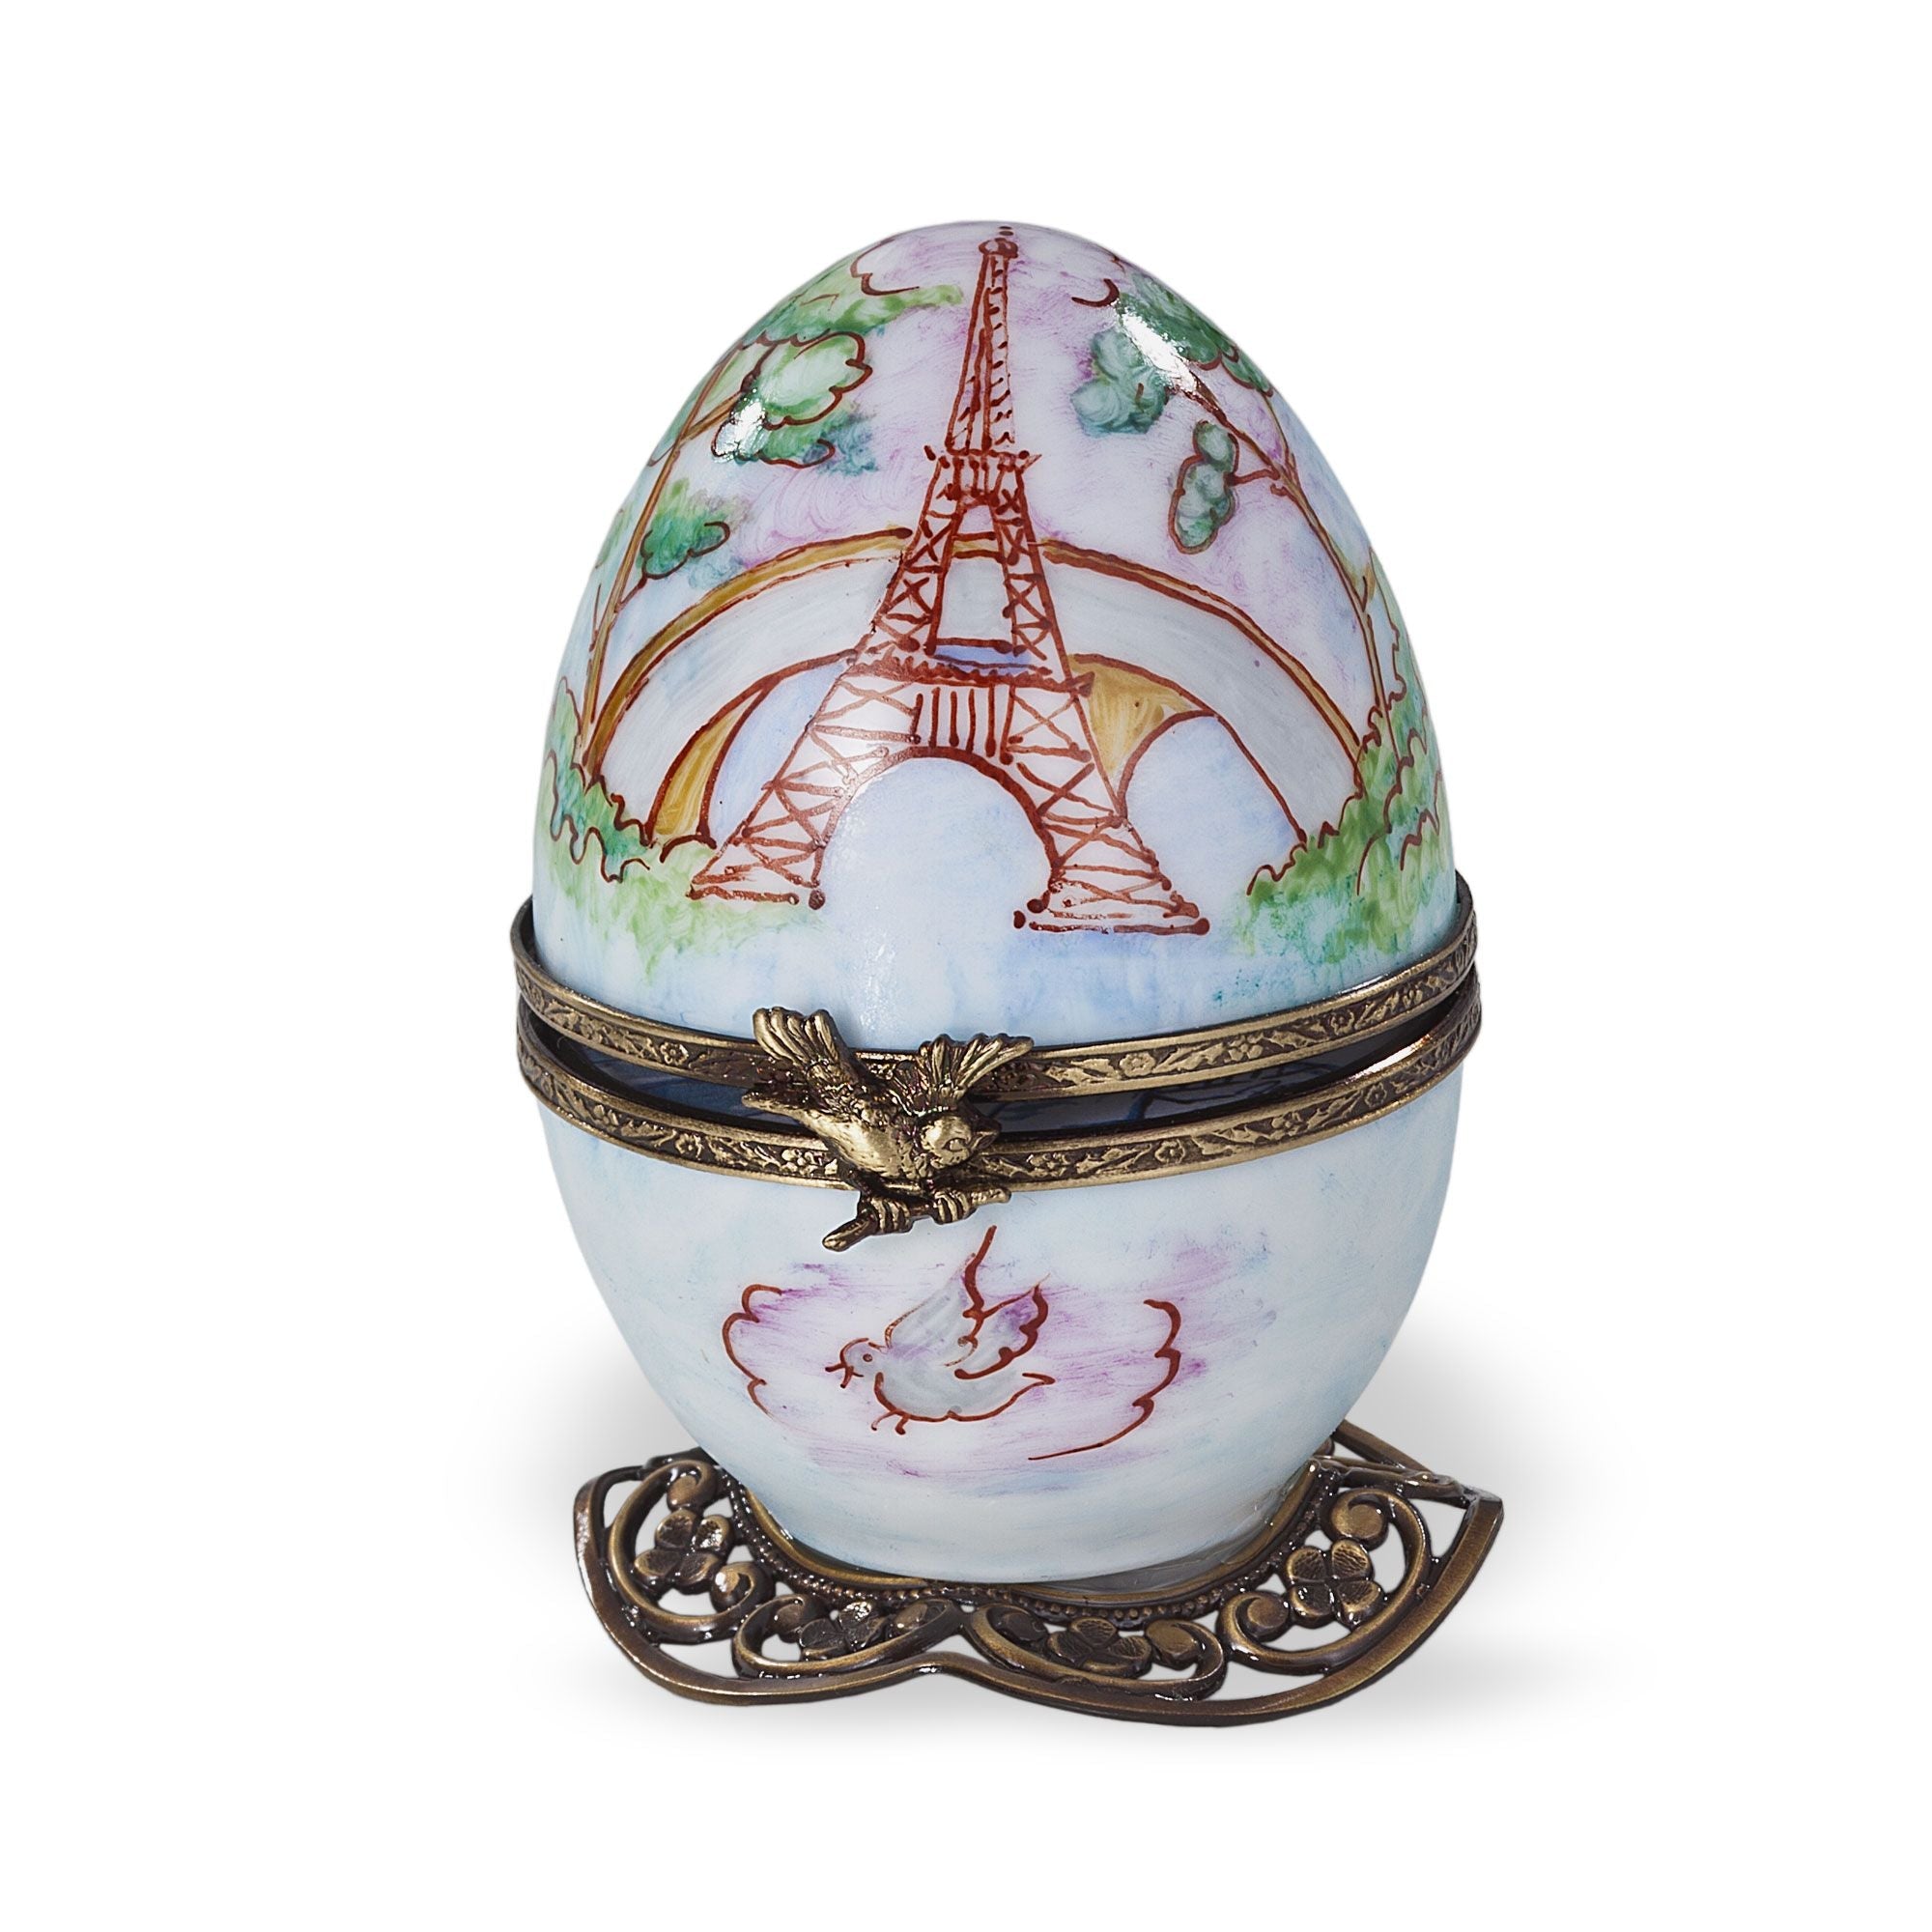 Limoges Porcelain White Musical Egg With Birds